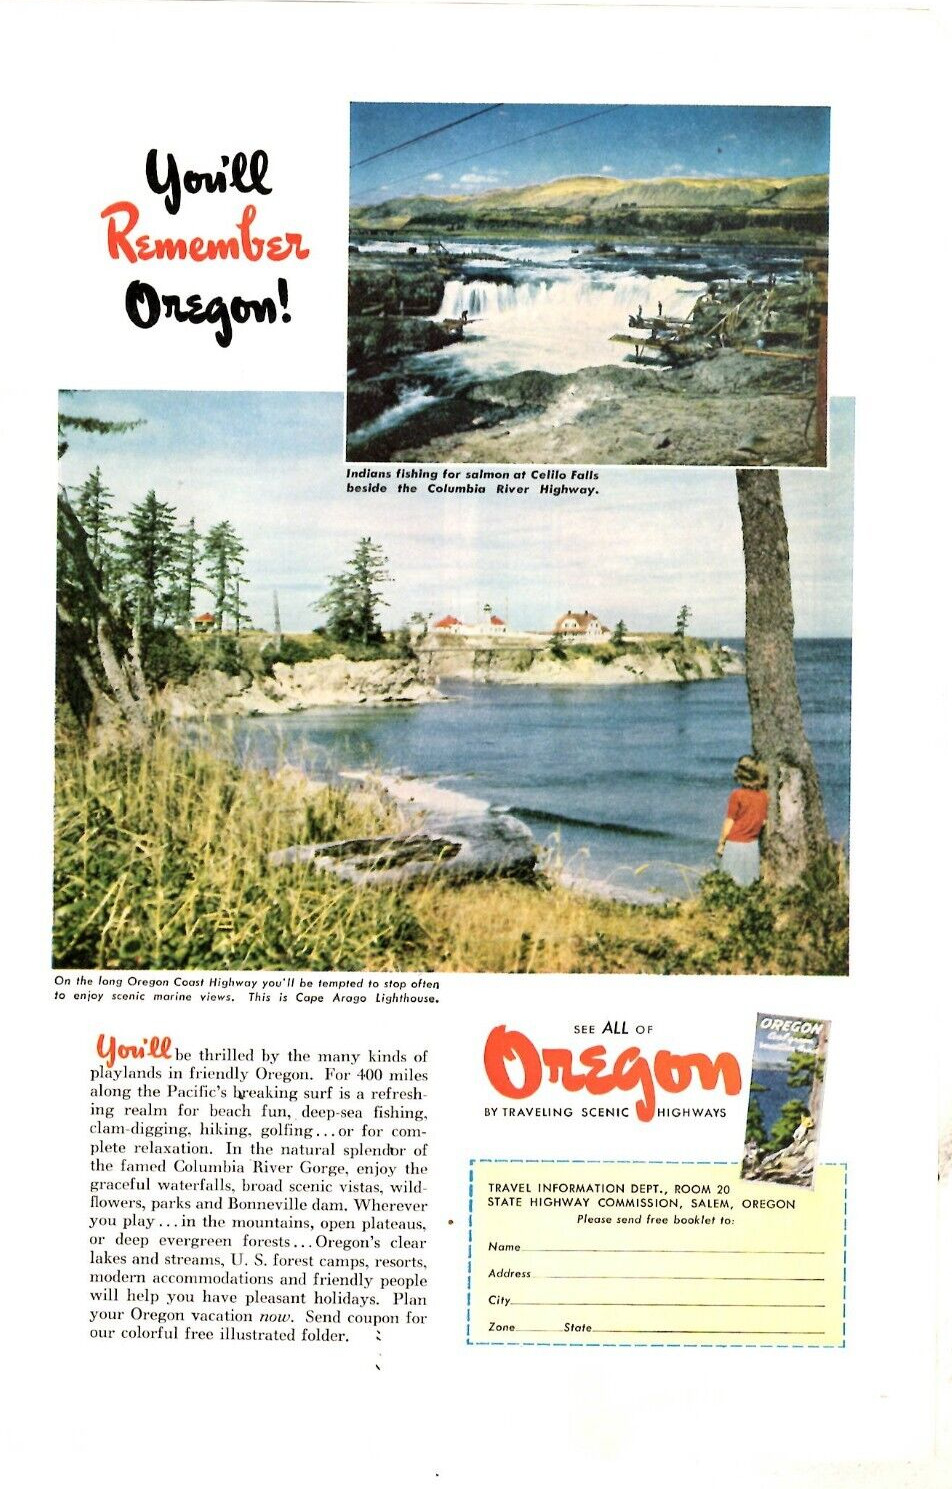 1950 Print Ad Oregon Travel Information Department Celio Falls Columbia River